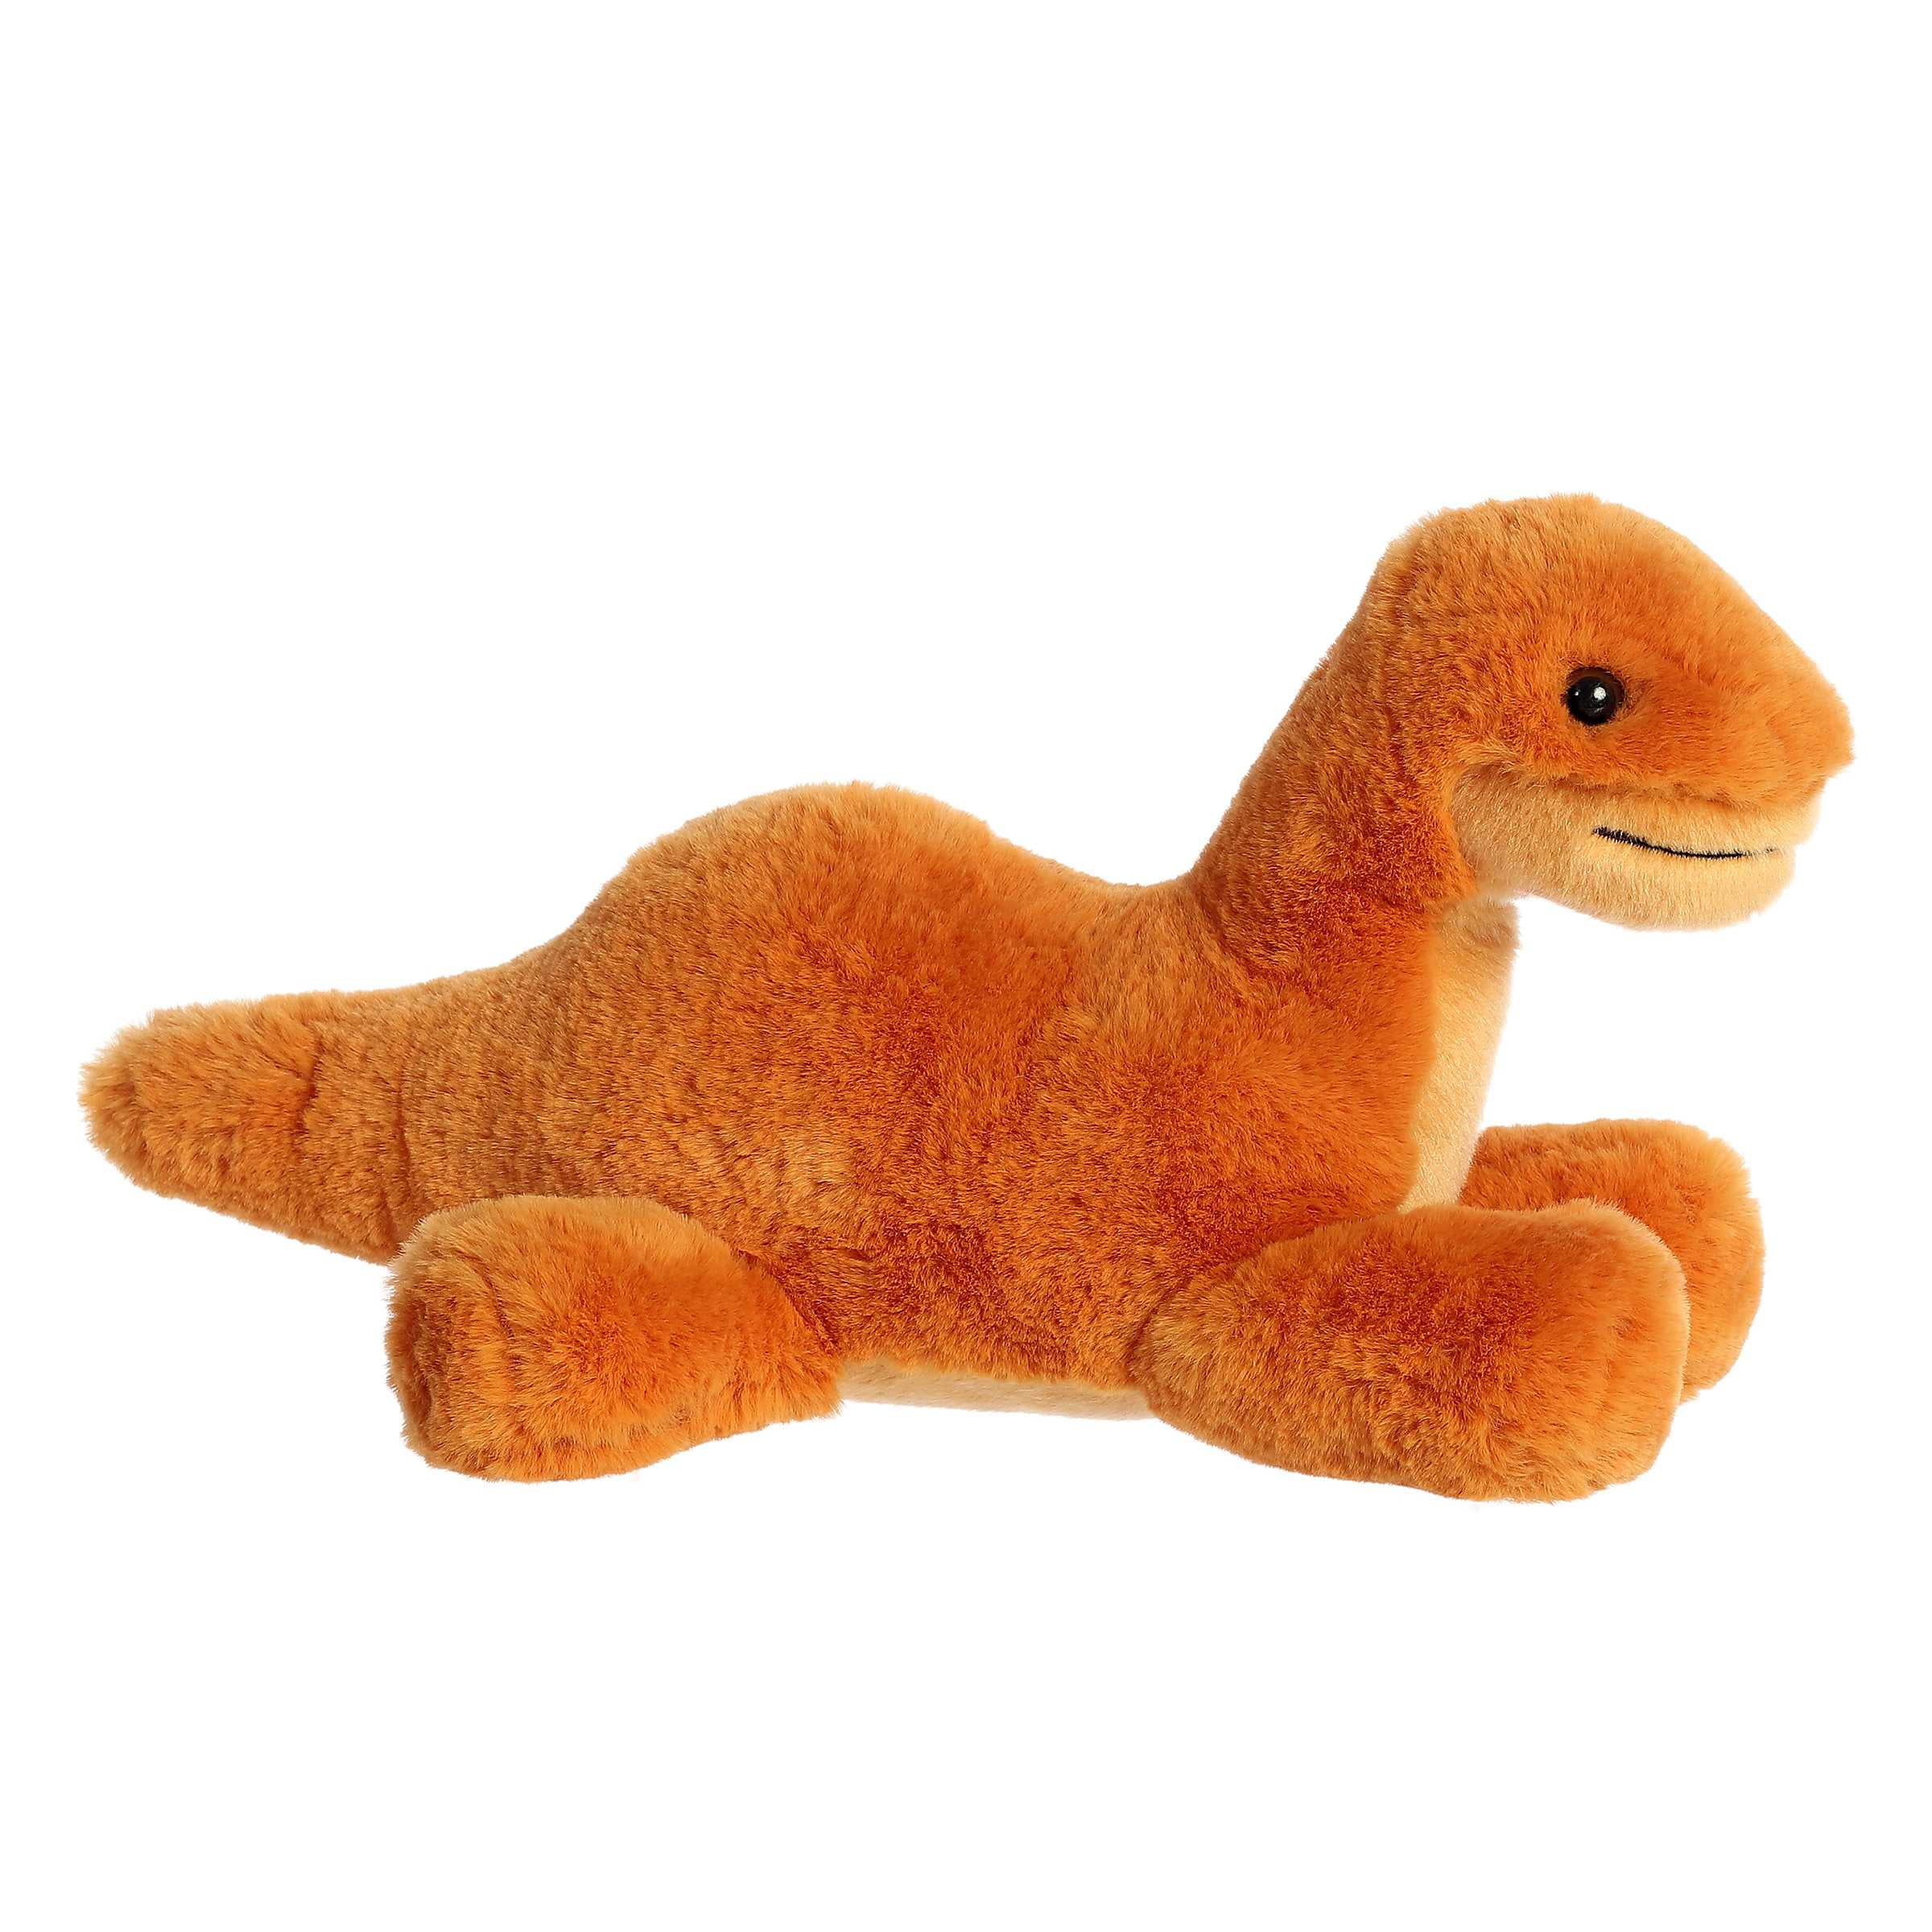 Bronti the Brontosaurus - Dinosaur Stuffed Animal | Bellzi